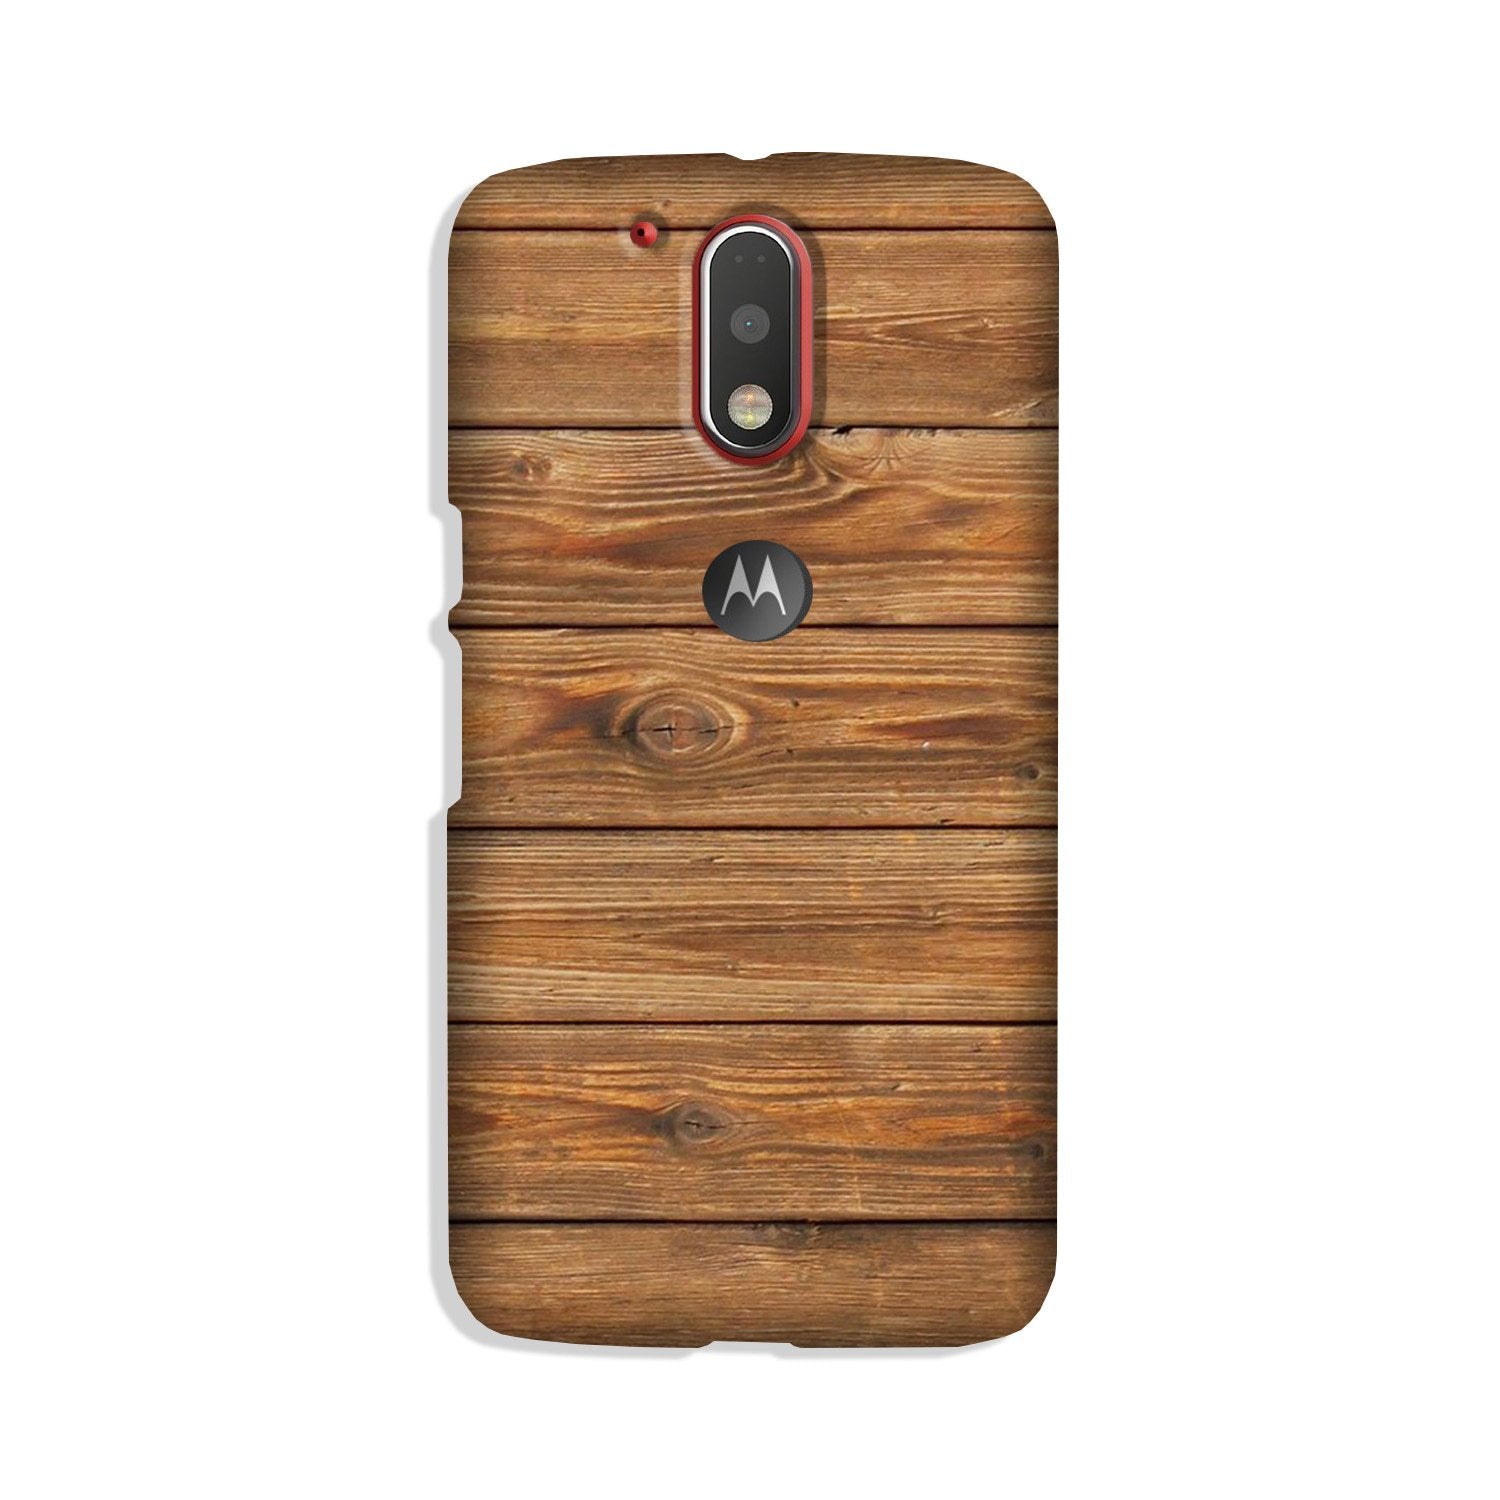 Wooden Look Case for Moto G4 Plus(Design - 113)